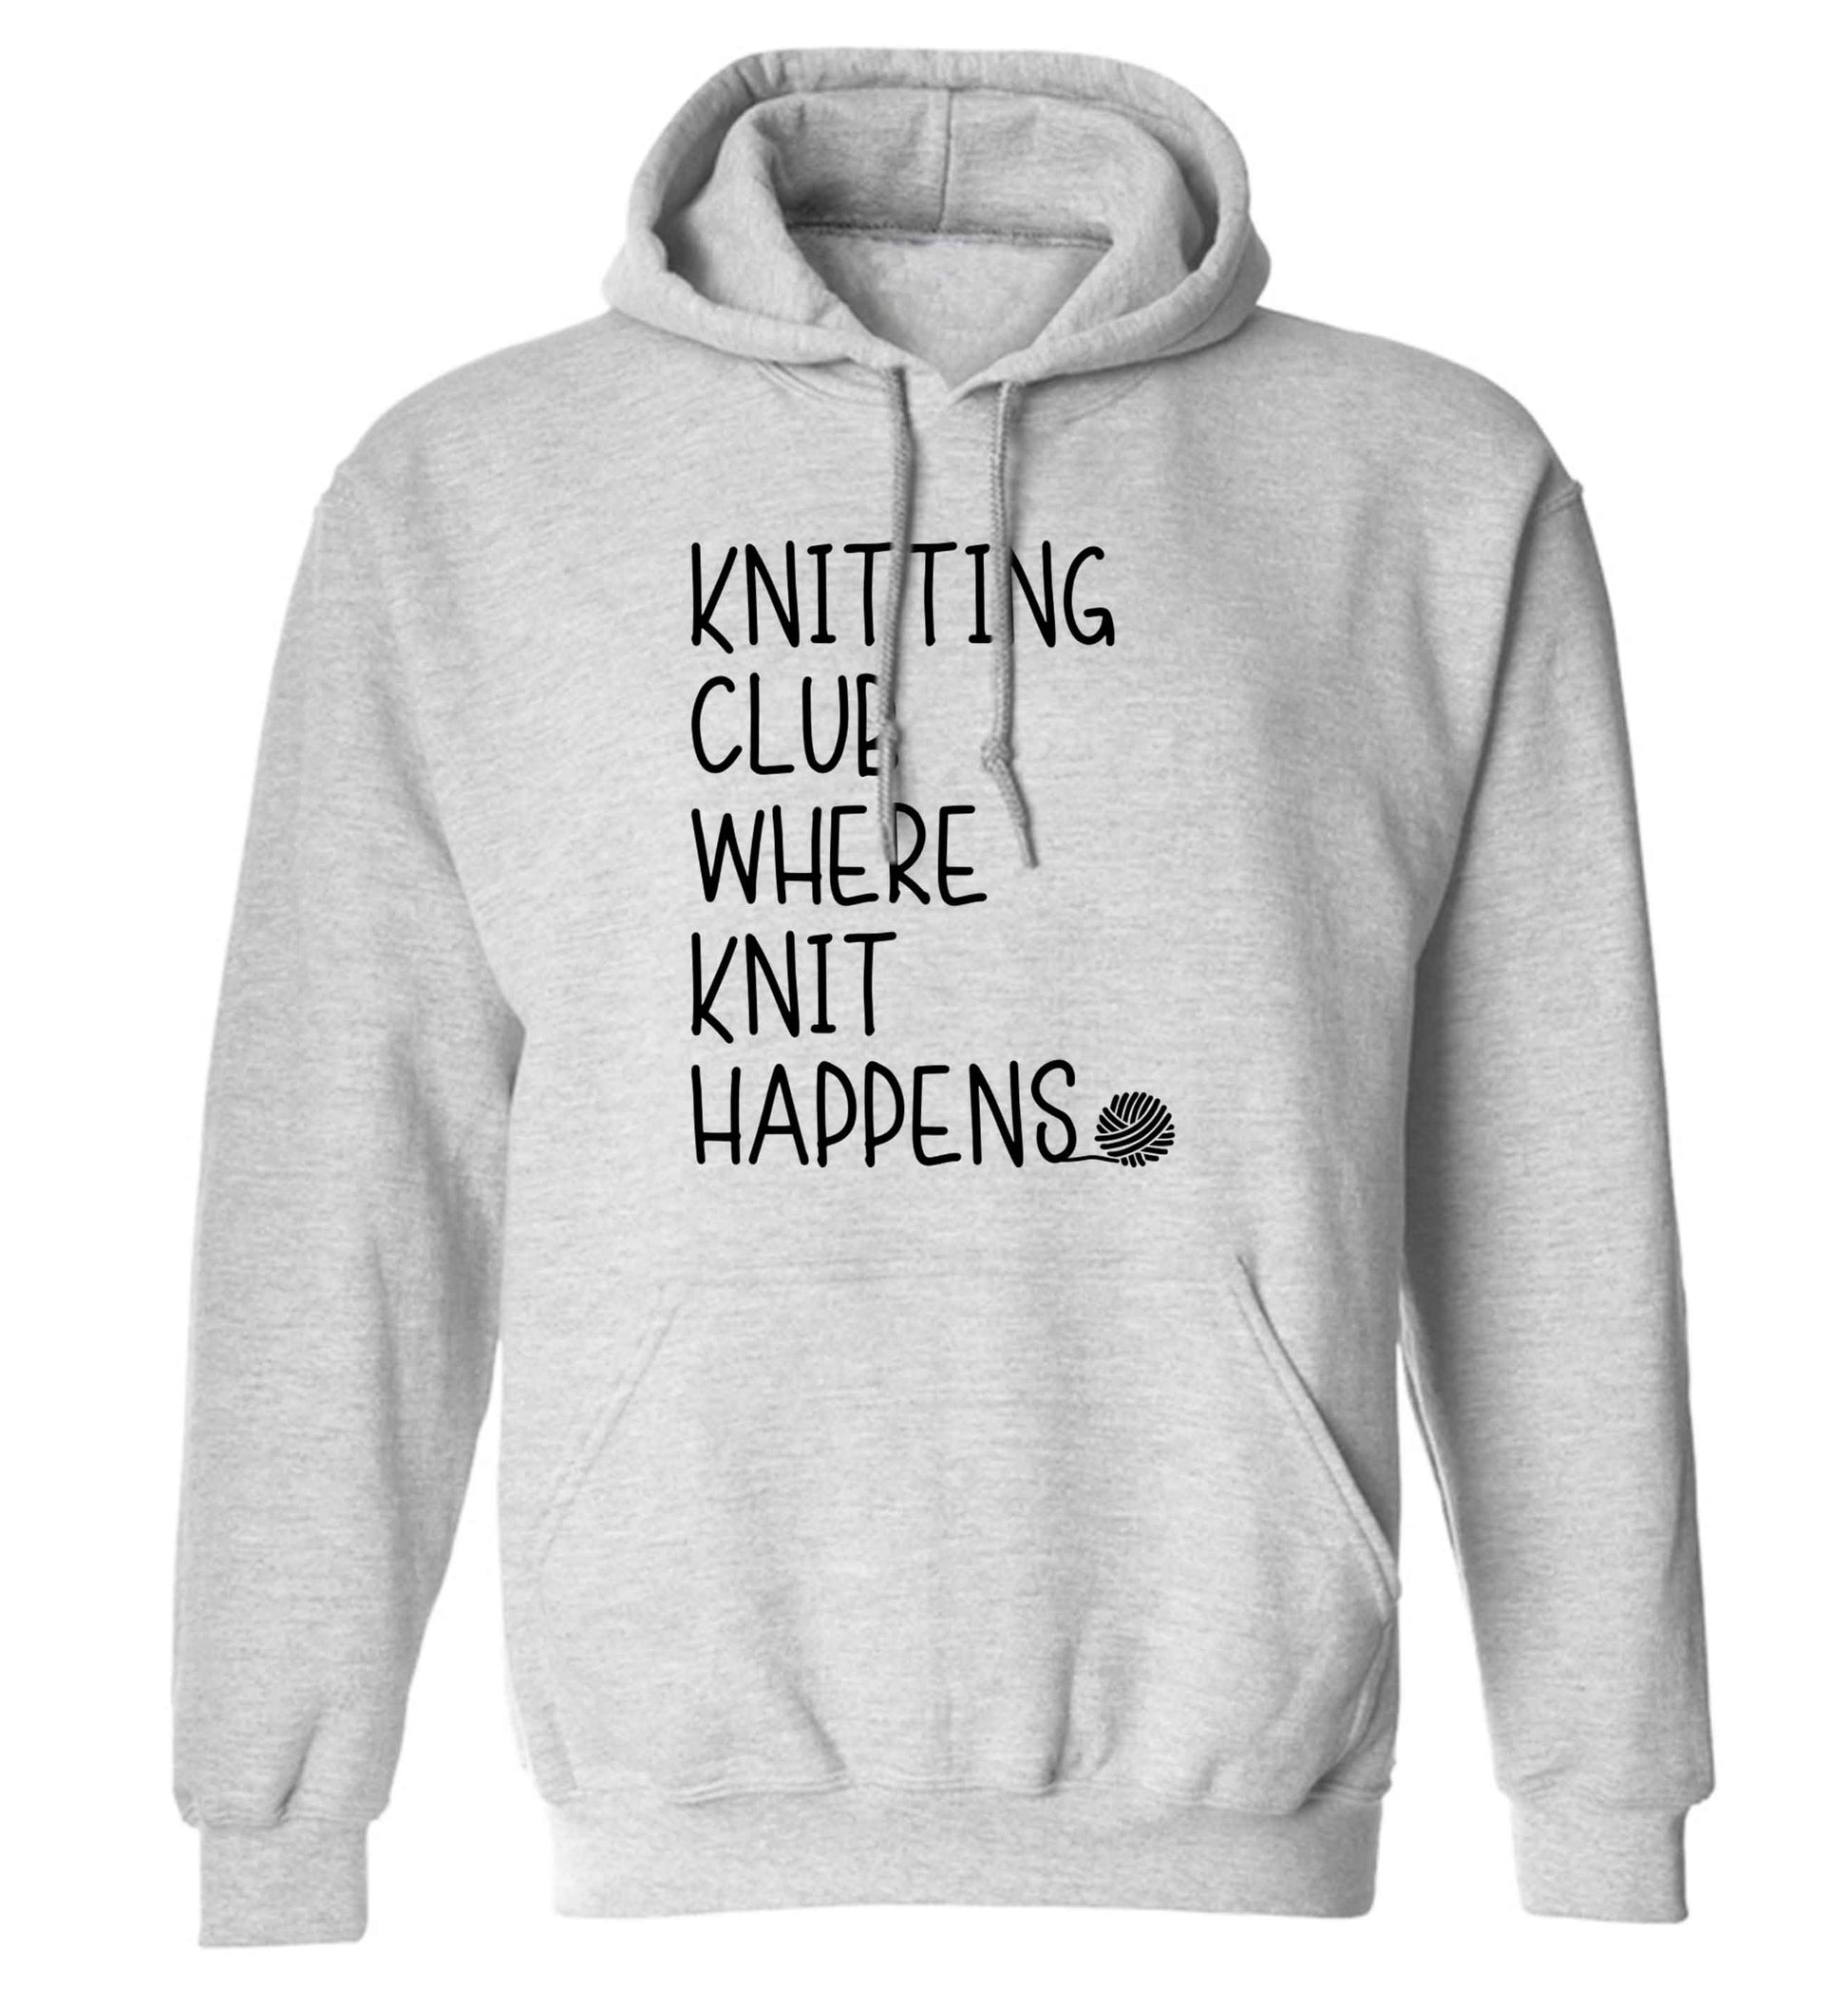 Knitting club where knit happens adults unisex grey hoodie 2XL